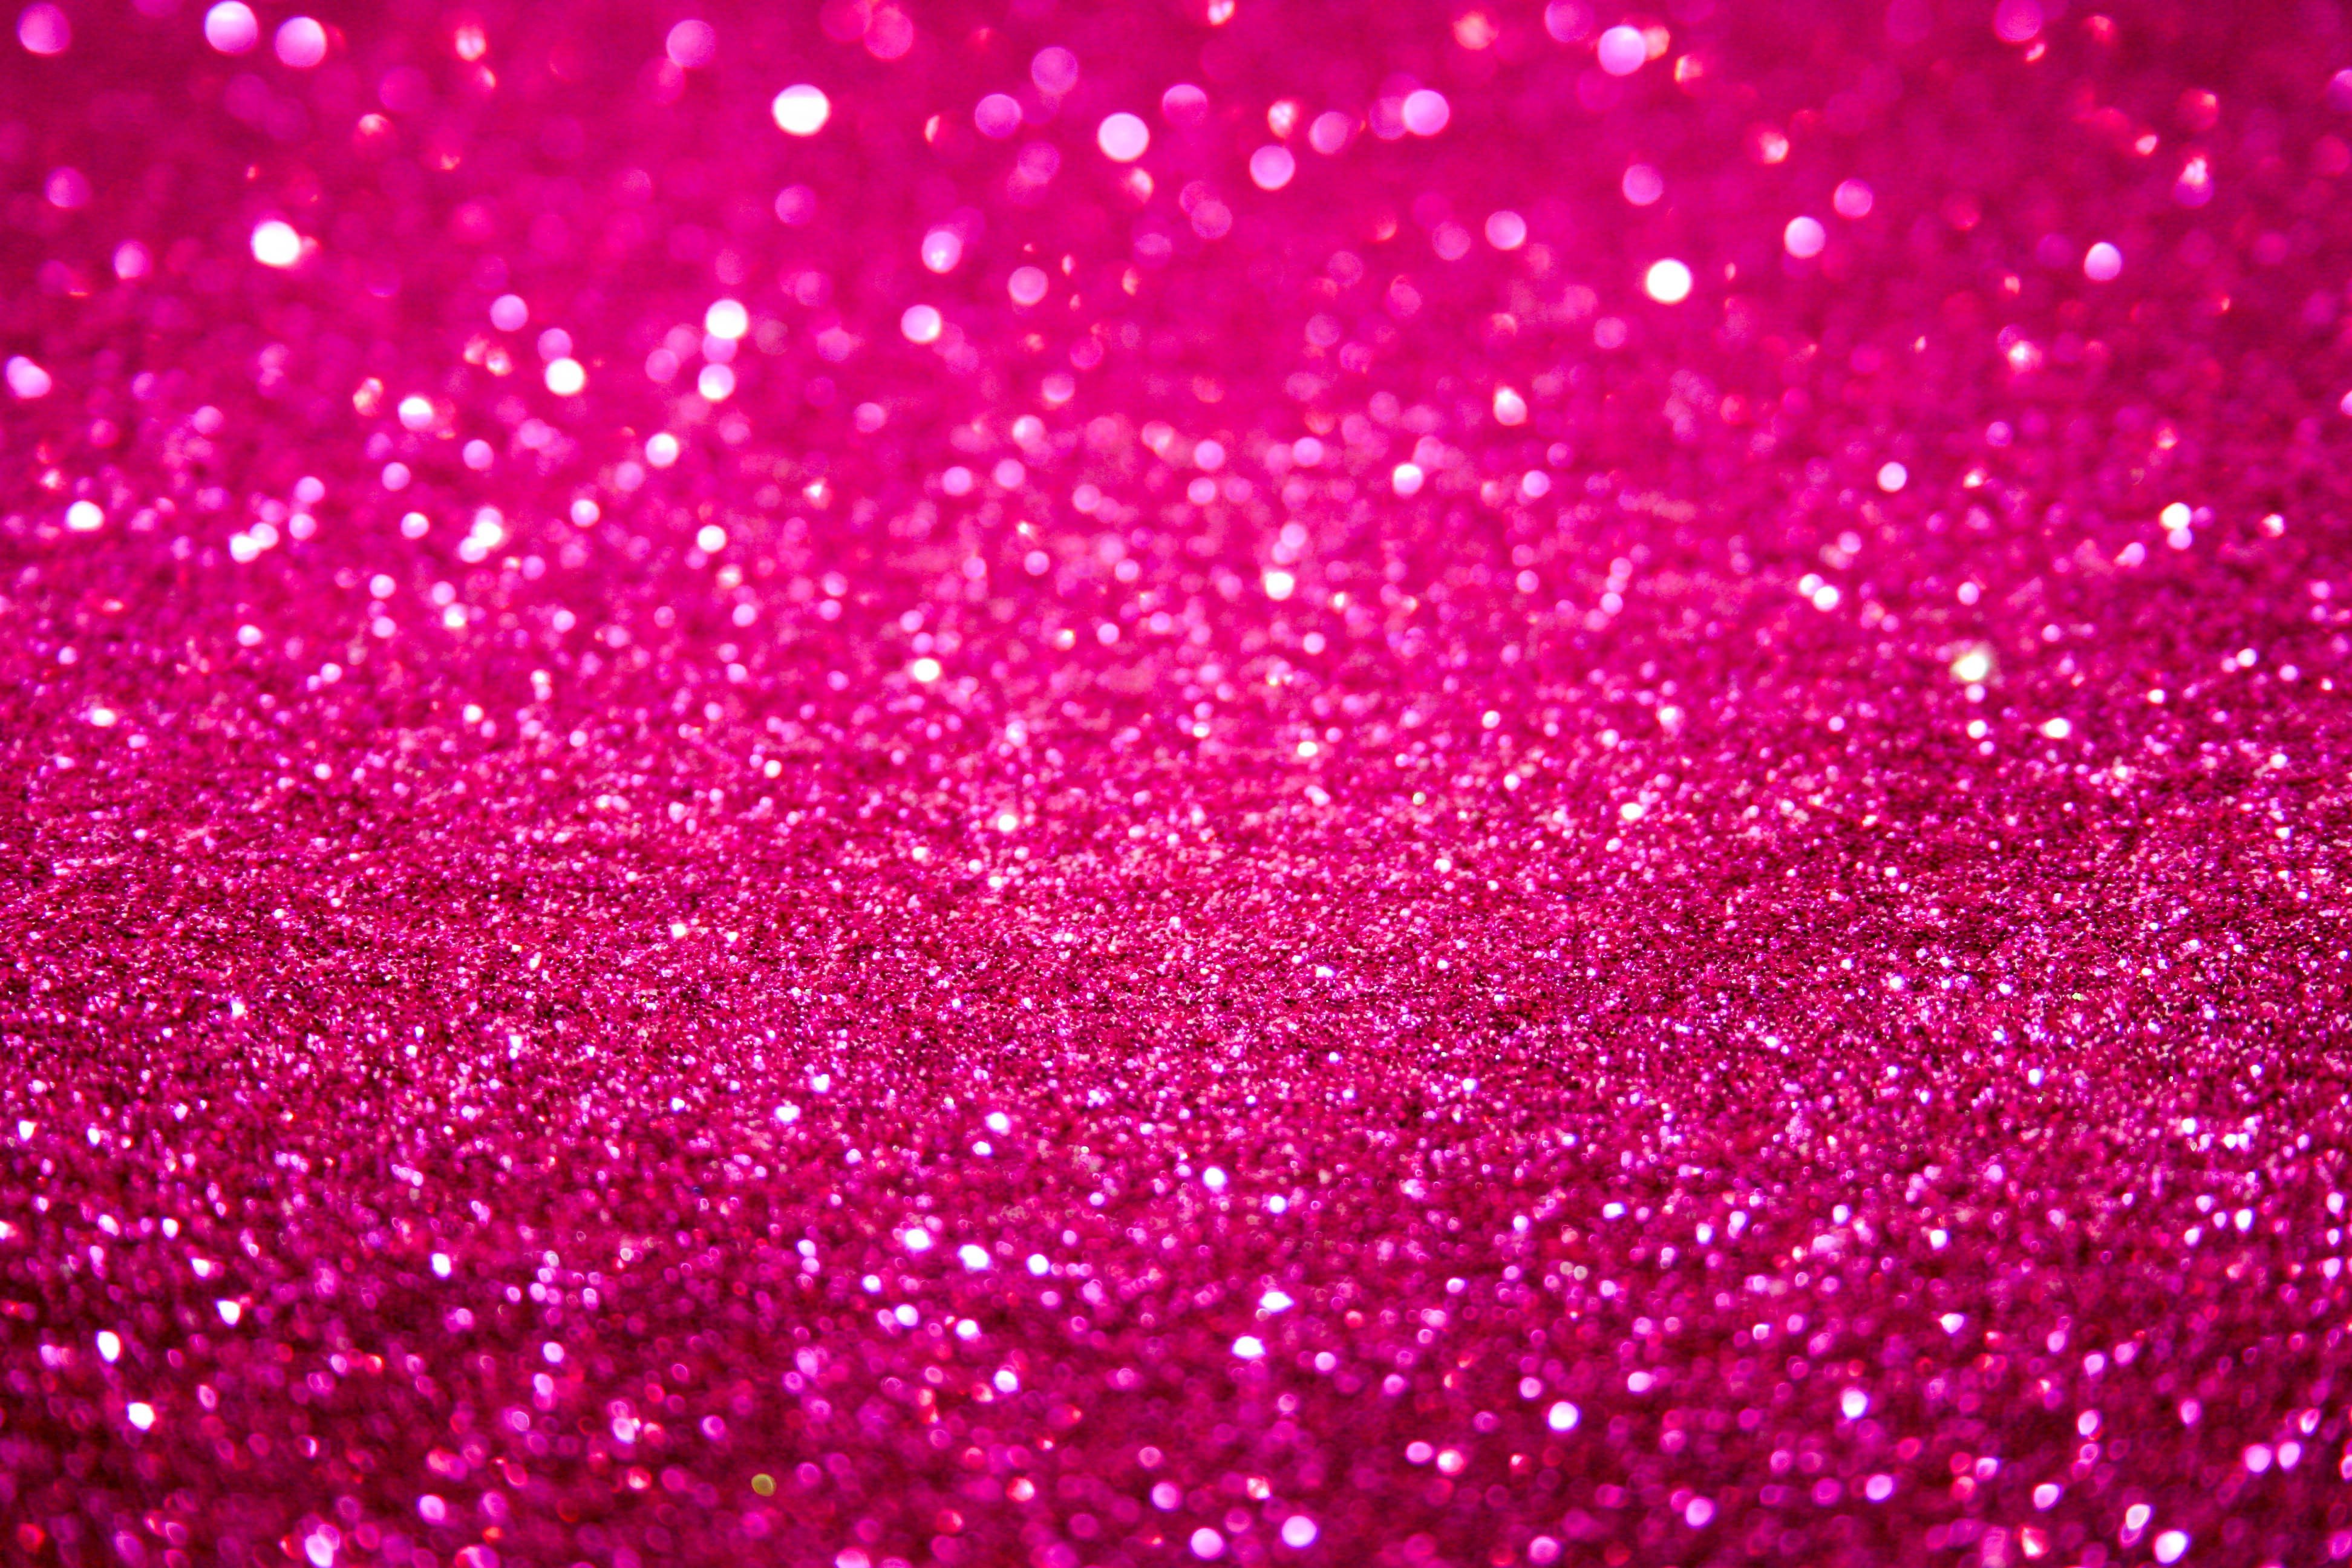 Light Pink Wallpapers  Top 35 Best Light Pink Backgrounds Download